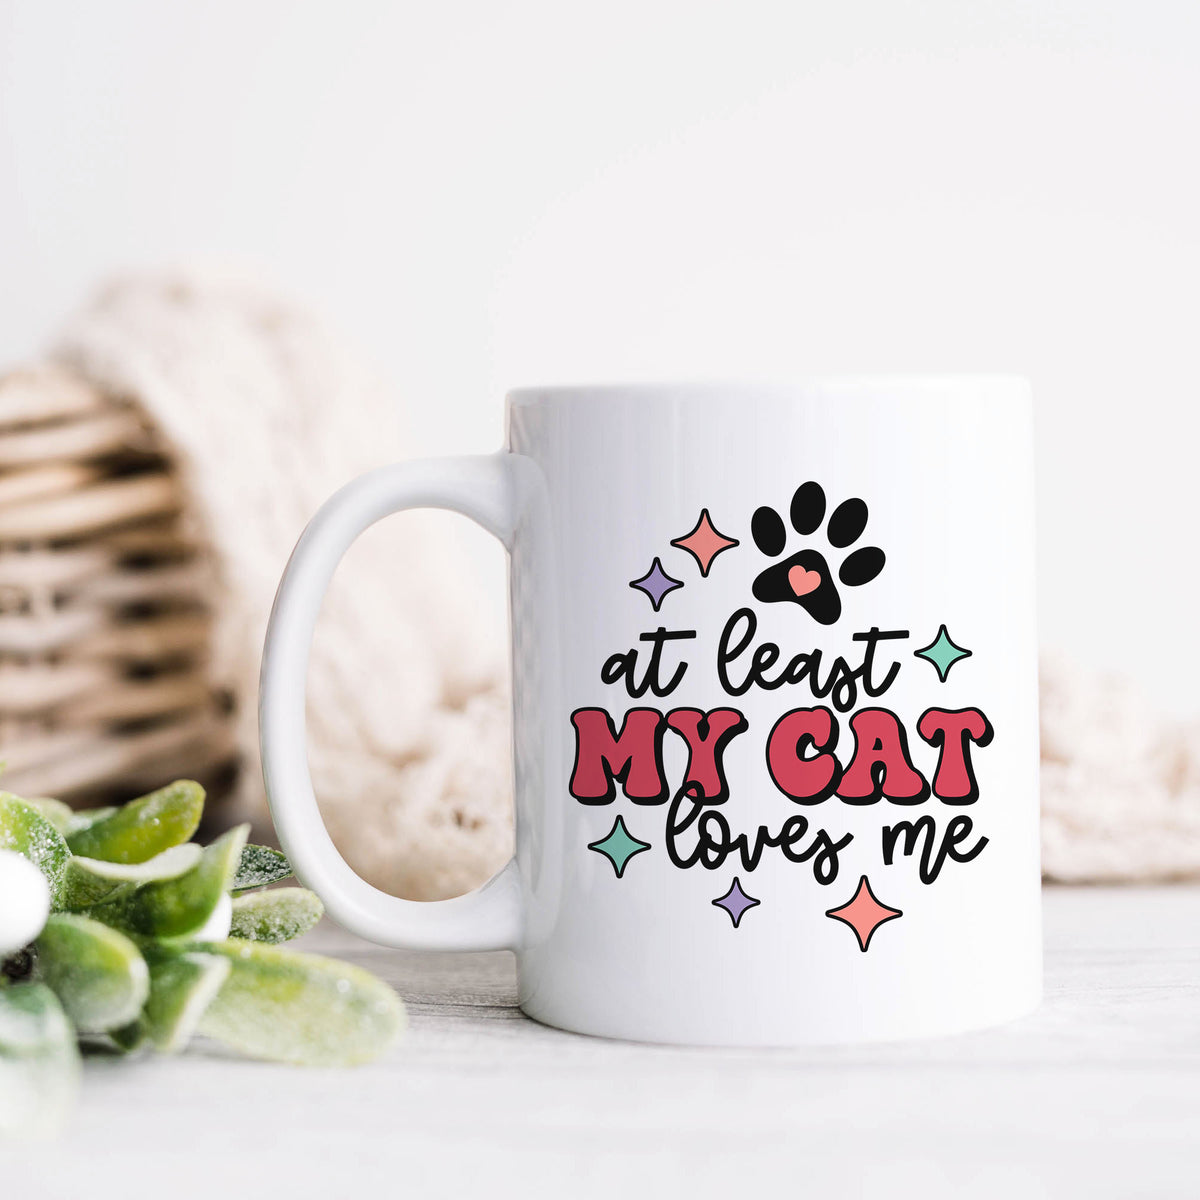 Cats Make Me Happy 14 oz Travel Mug – I love Veterinary